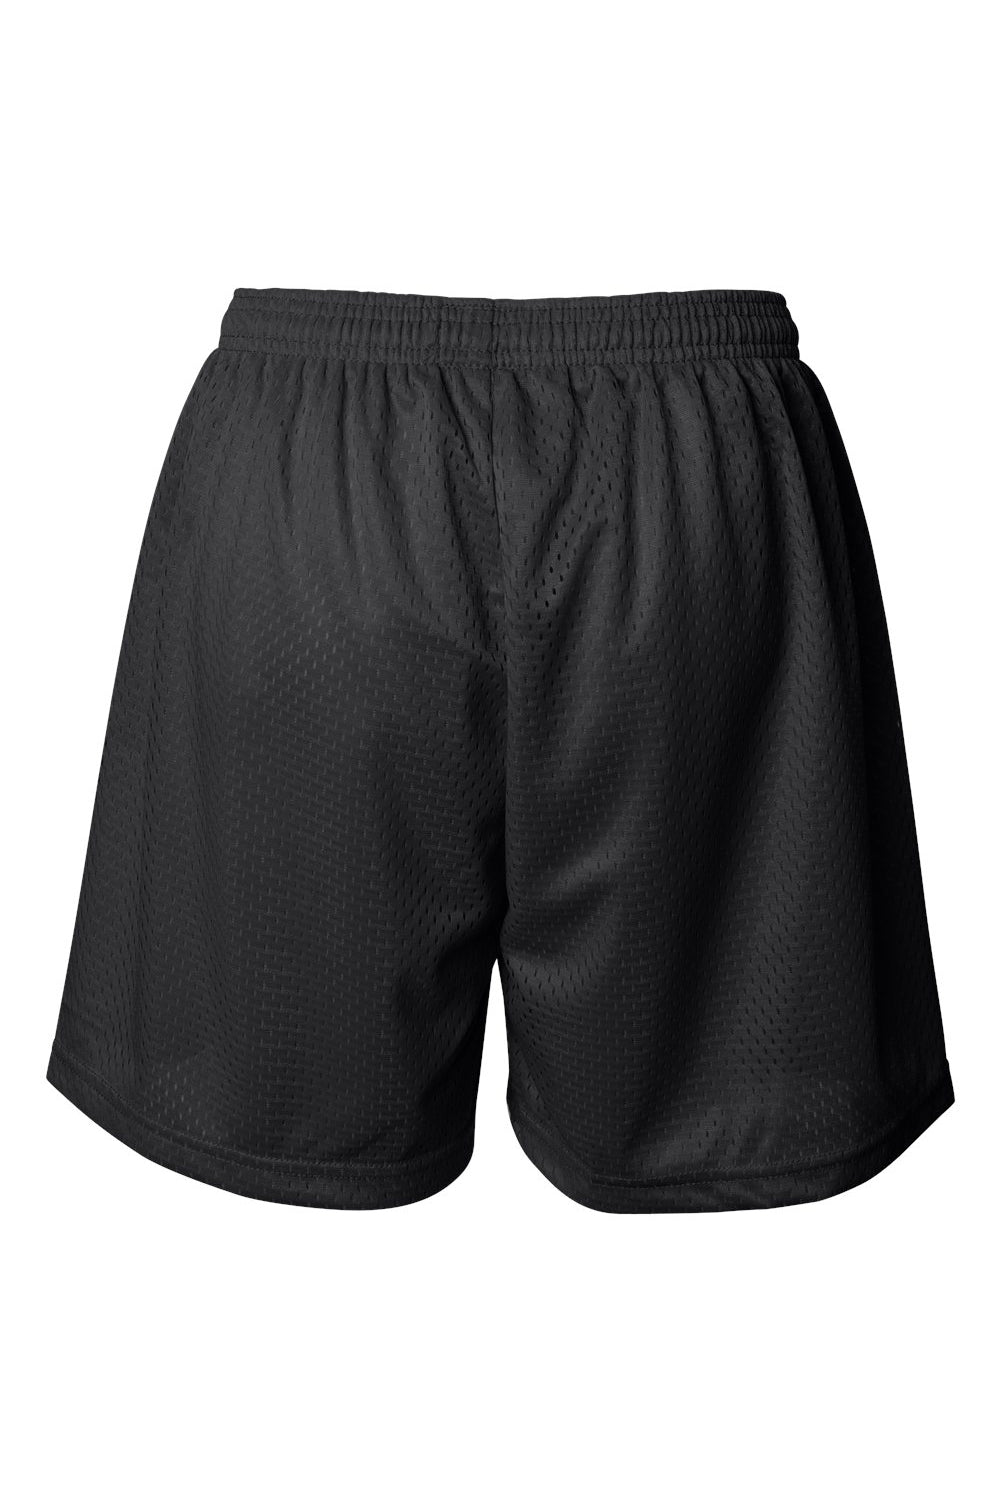 Badger 7216 Womens Pro Mesh Shorts w/ Liner Black Flat Back